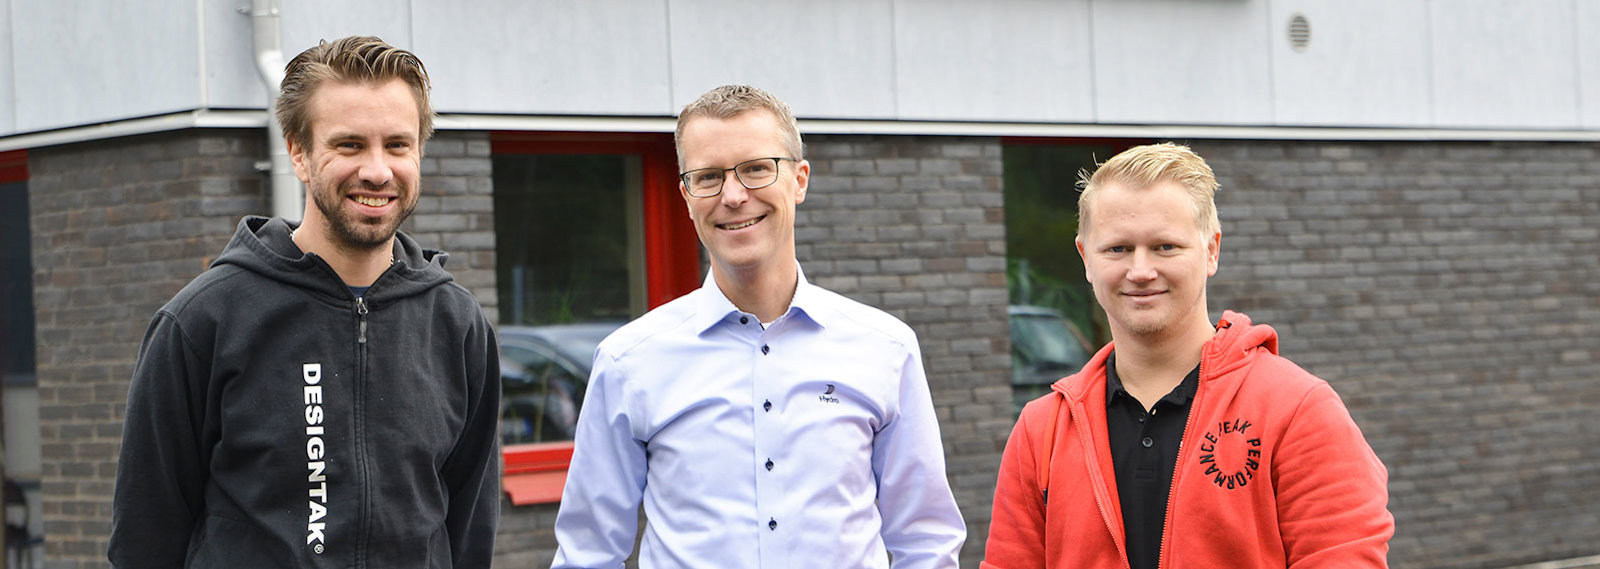 Eddie Wingren, Hans Fredriksson and Daniel Hallgren posing in front of Designtak's office.